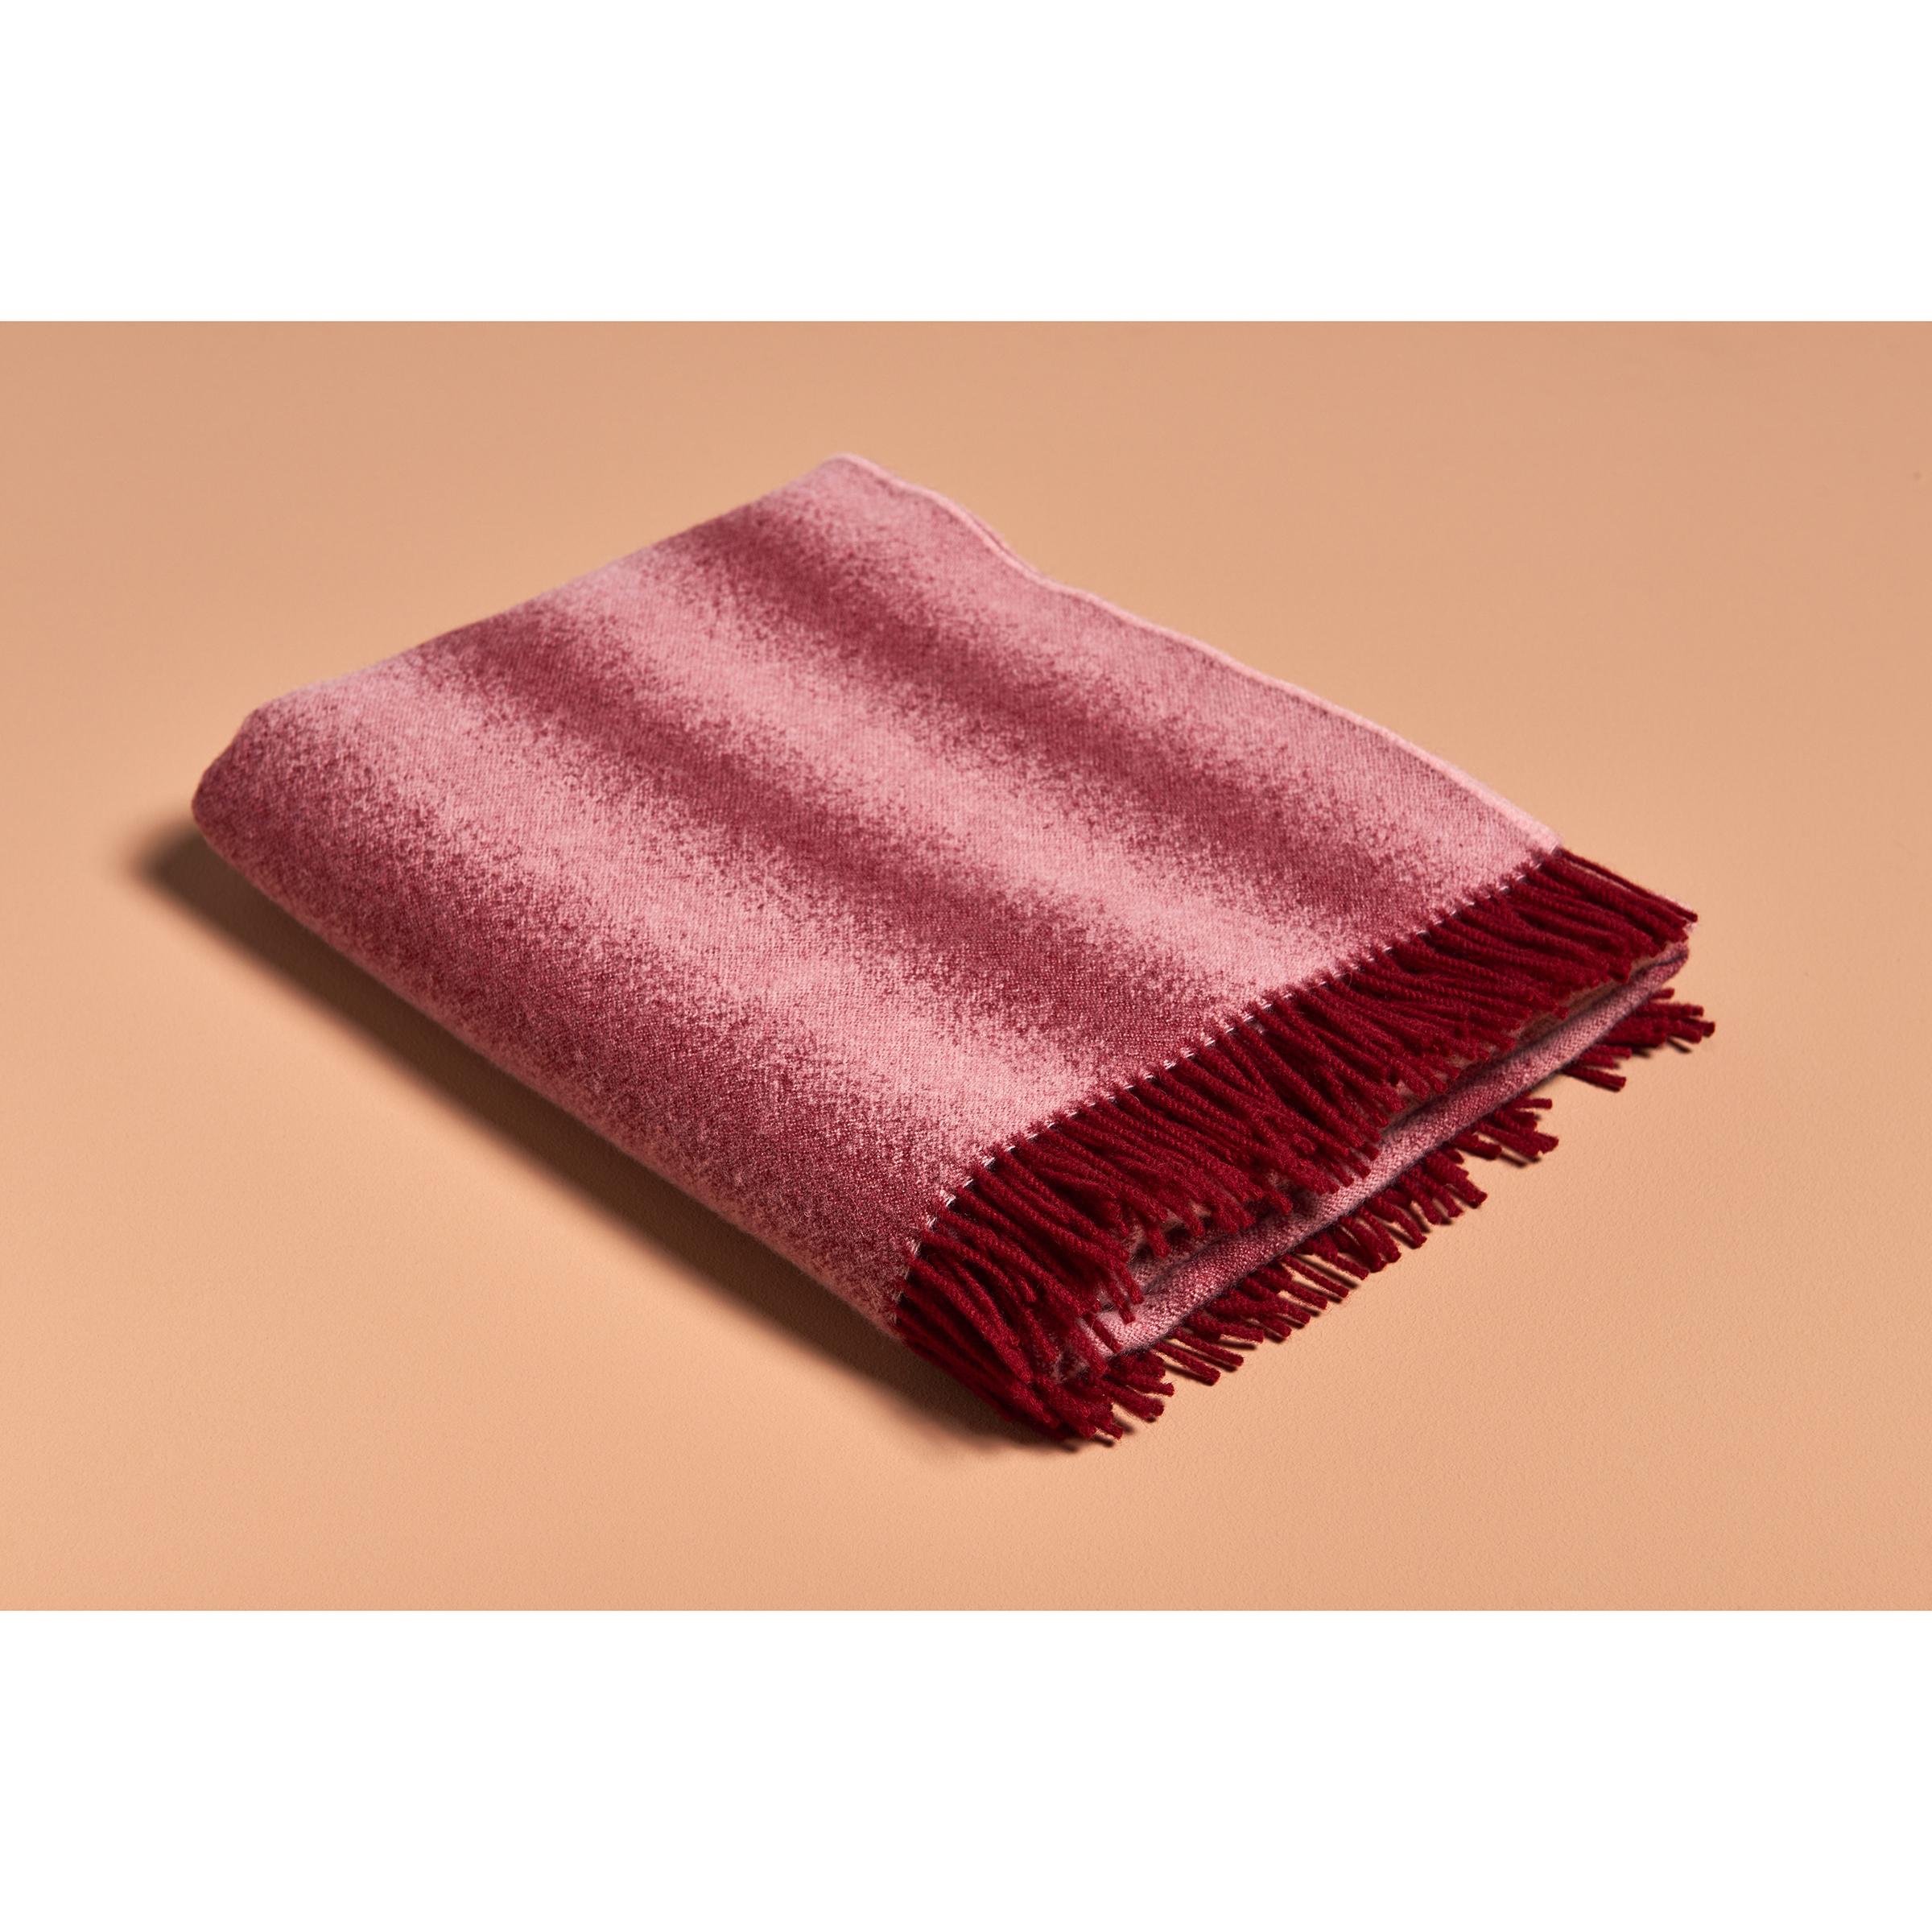 Schneid Studio Tide Blanket, Burgundy & Blush In New Condition For Sale In New York, NY